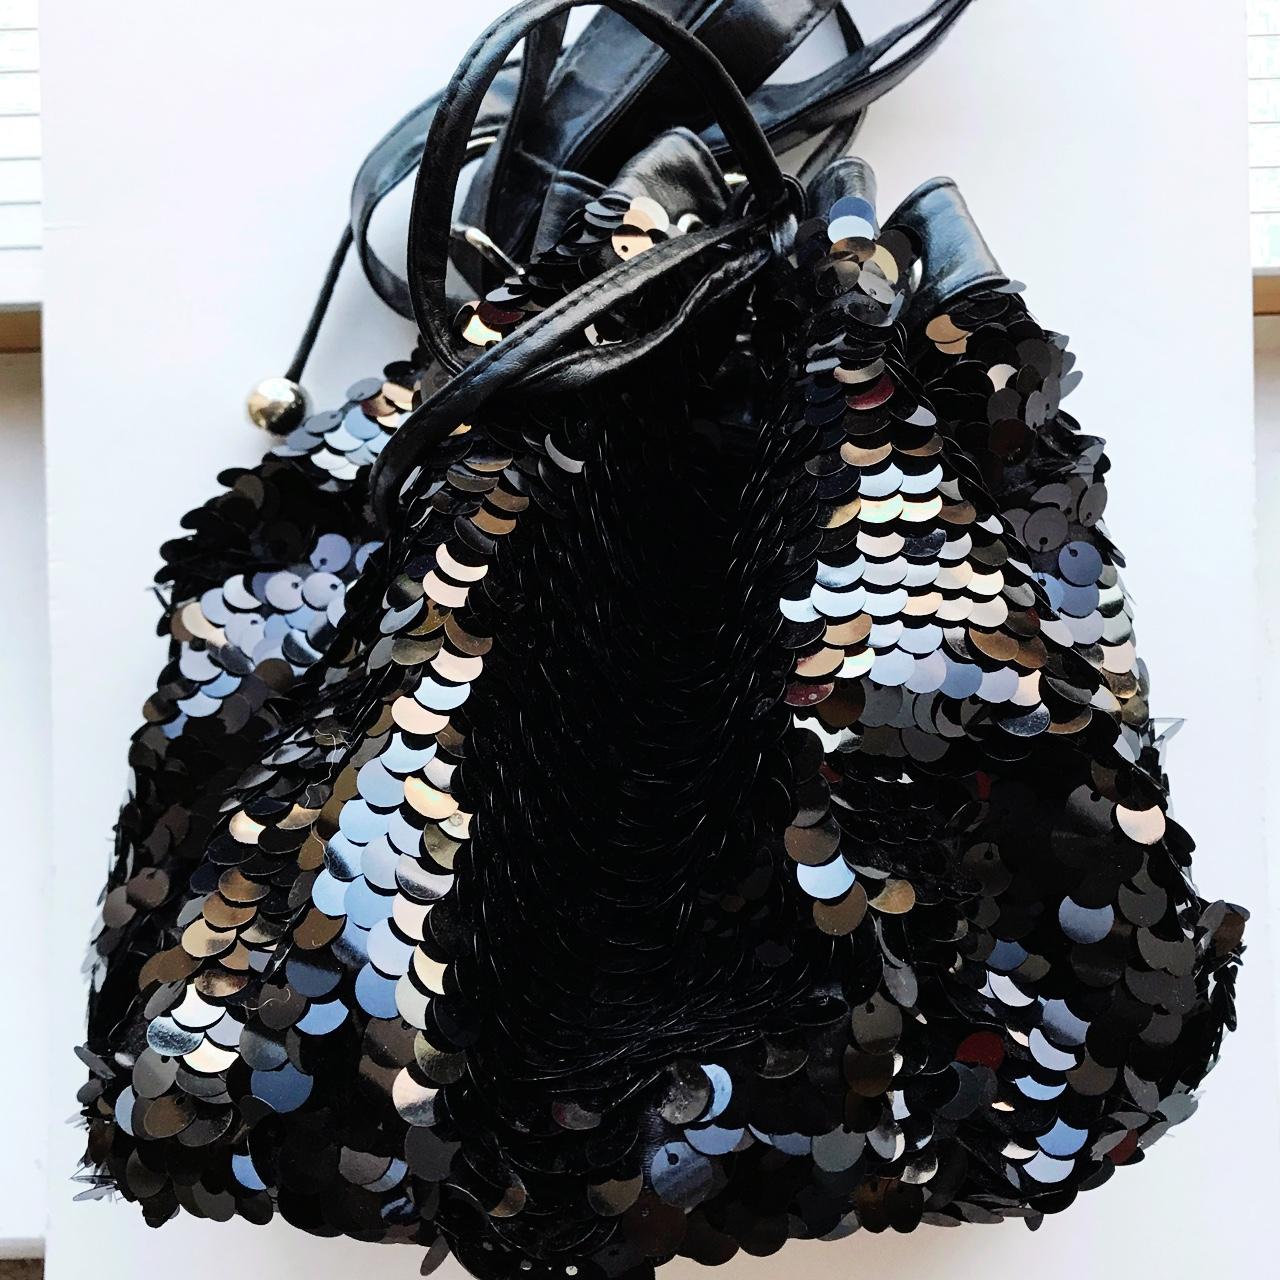 FESTIVAL EDIT: Black sequin pouch bag ️Drawstring... - Depop